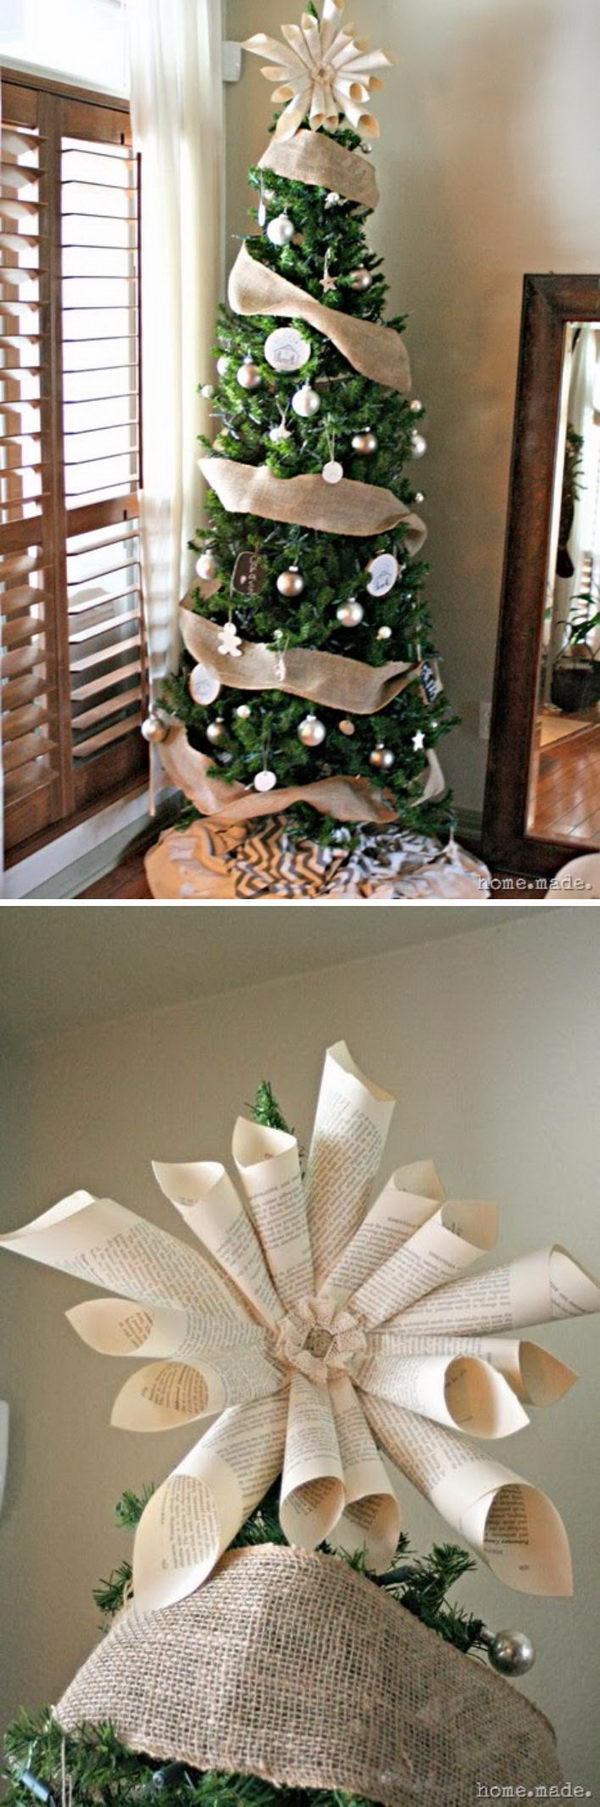 DIY Christmas Tree Topper
 Awesome DIY Christmas Tree Topper Ideas & Tutorials Hative